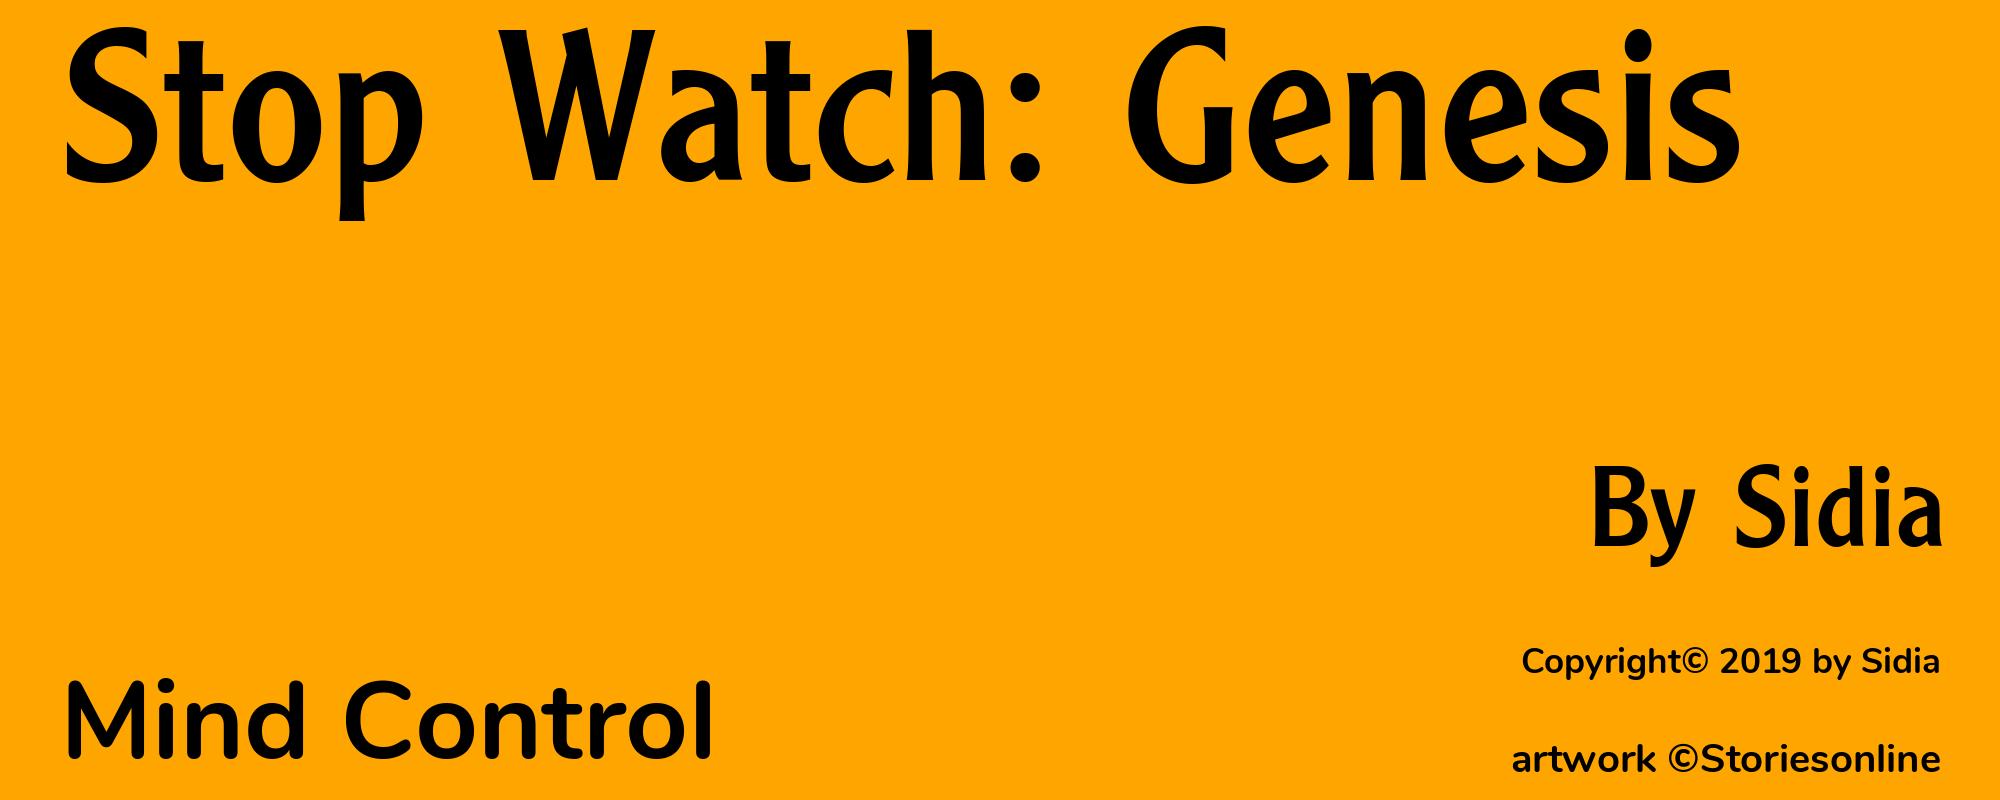 Stop Watch: Genesis - Cover